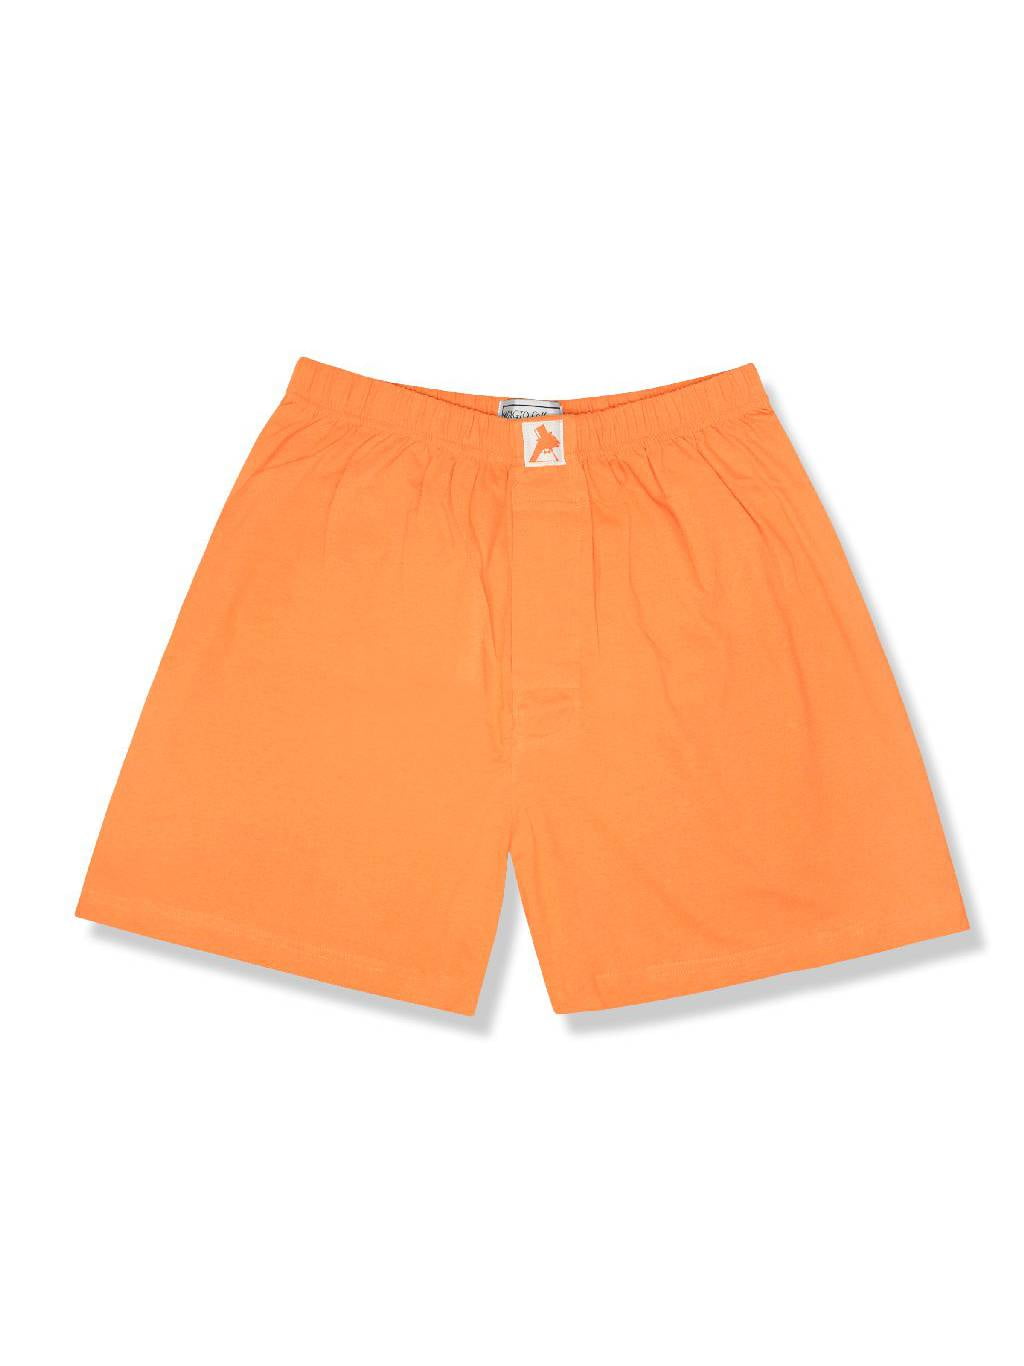 Biagio Mens Solid BURNT ORANGE Color BOXER 100% Knit Cotton Shorts size  Medium